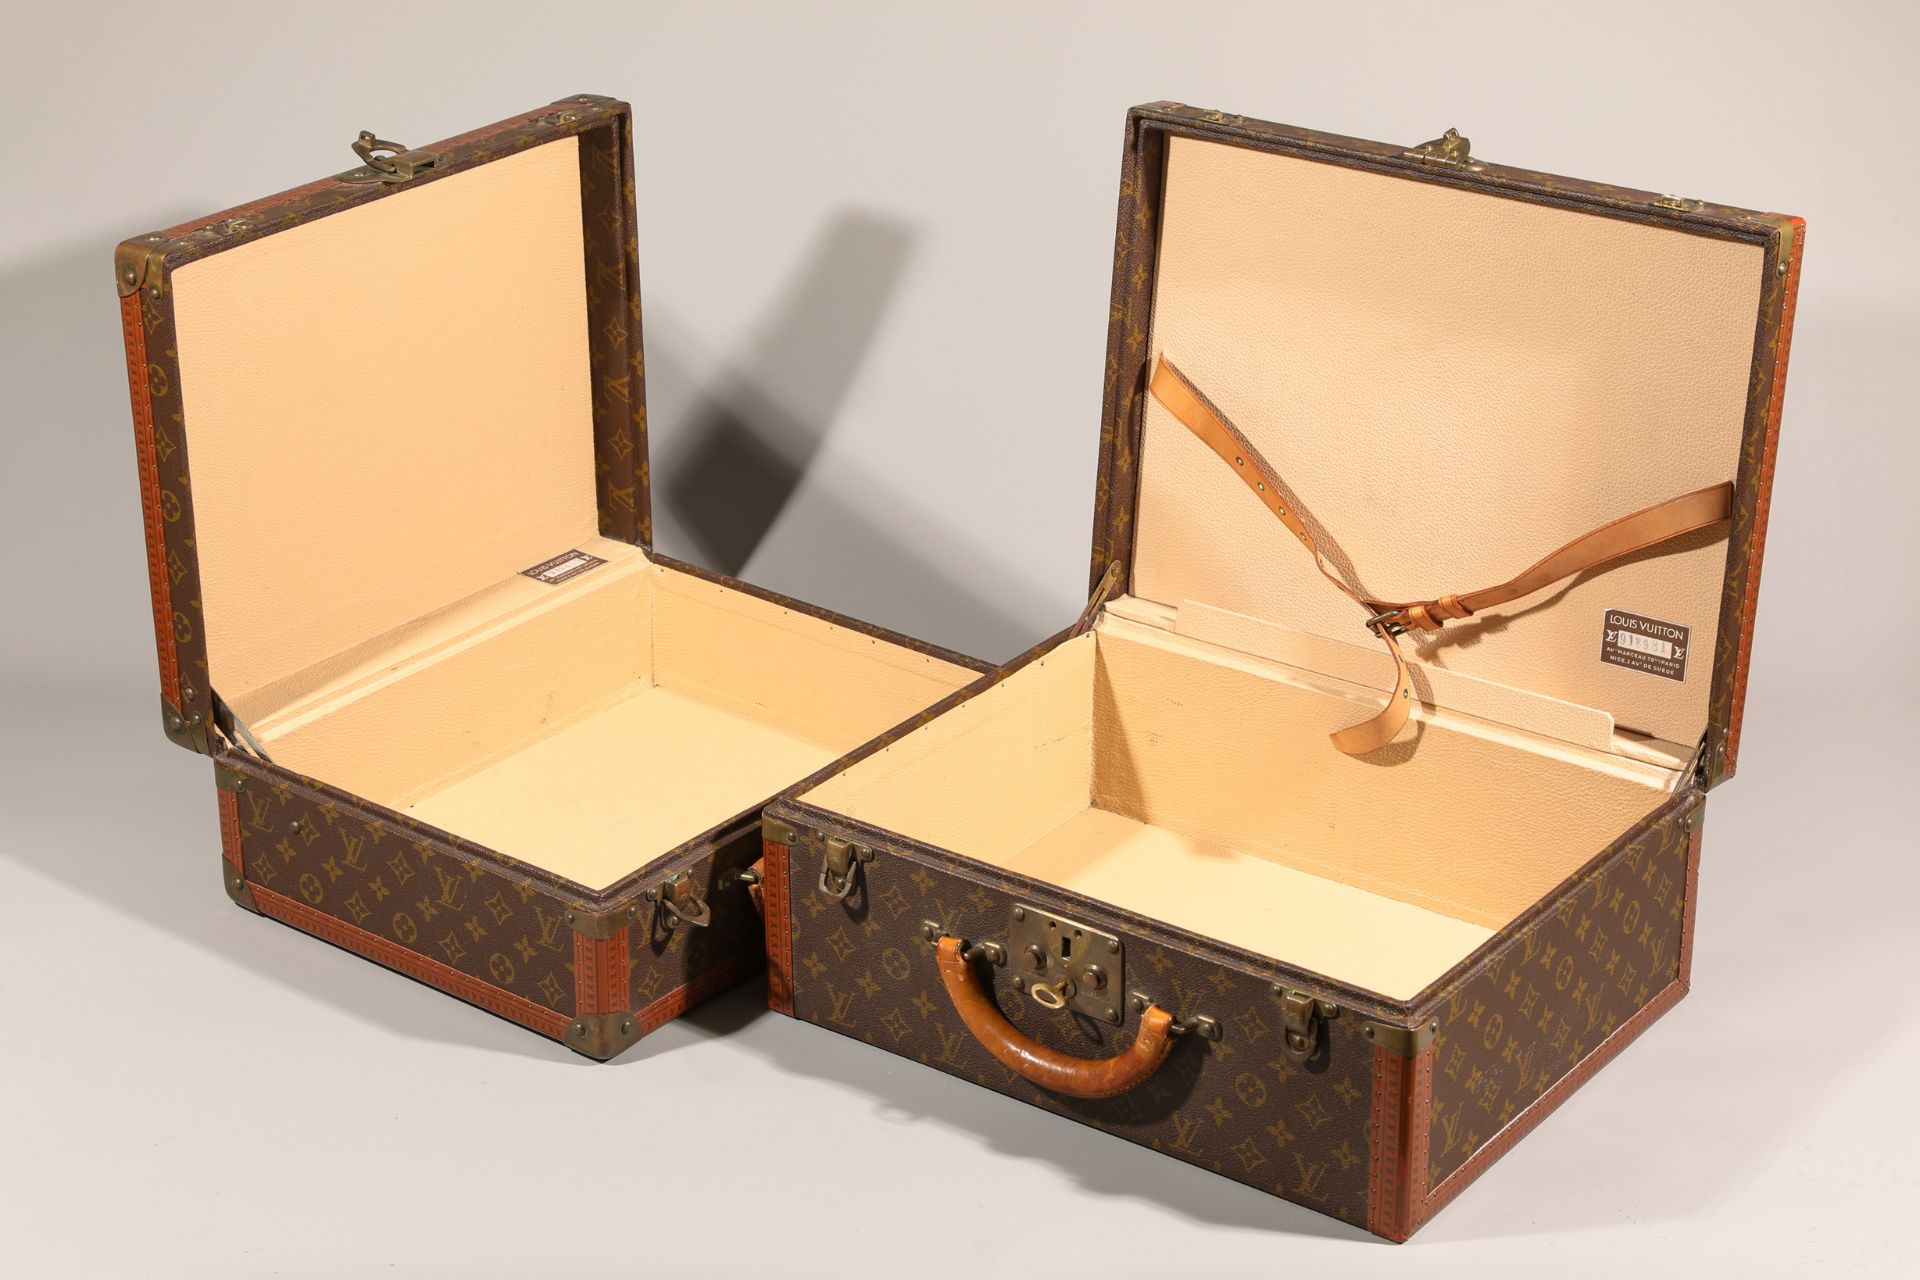 2 Louis Vuitton Suitcases, Model Rigid Alzer - Image 4 of 6